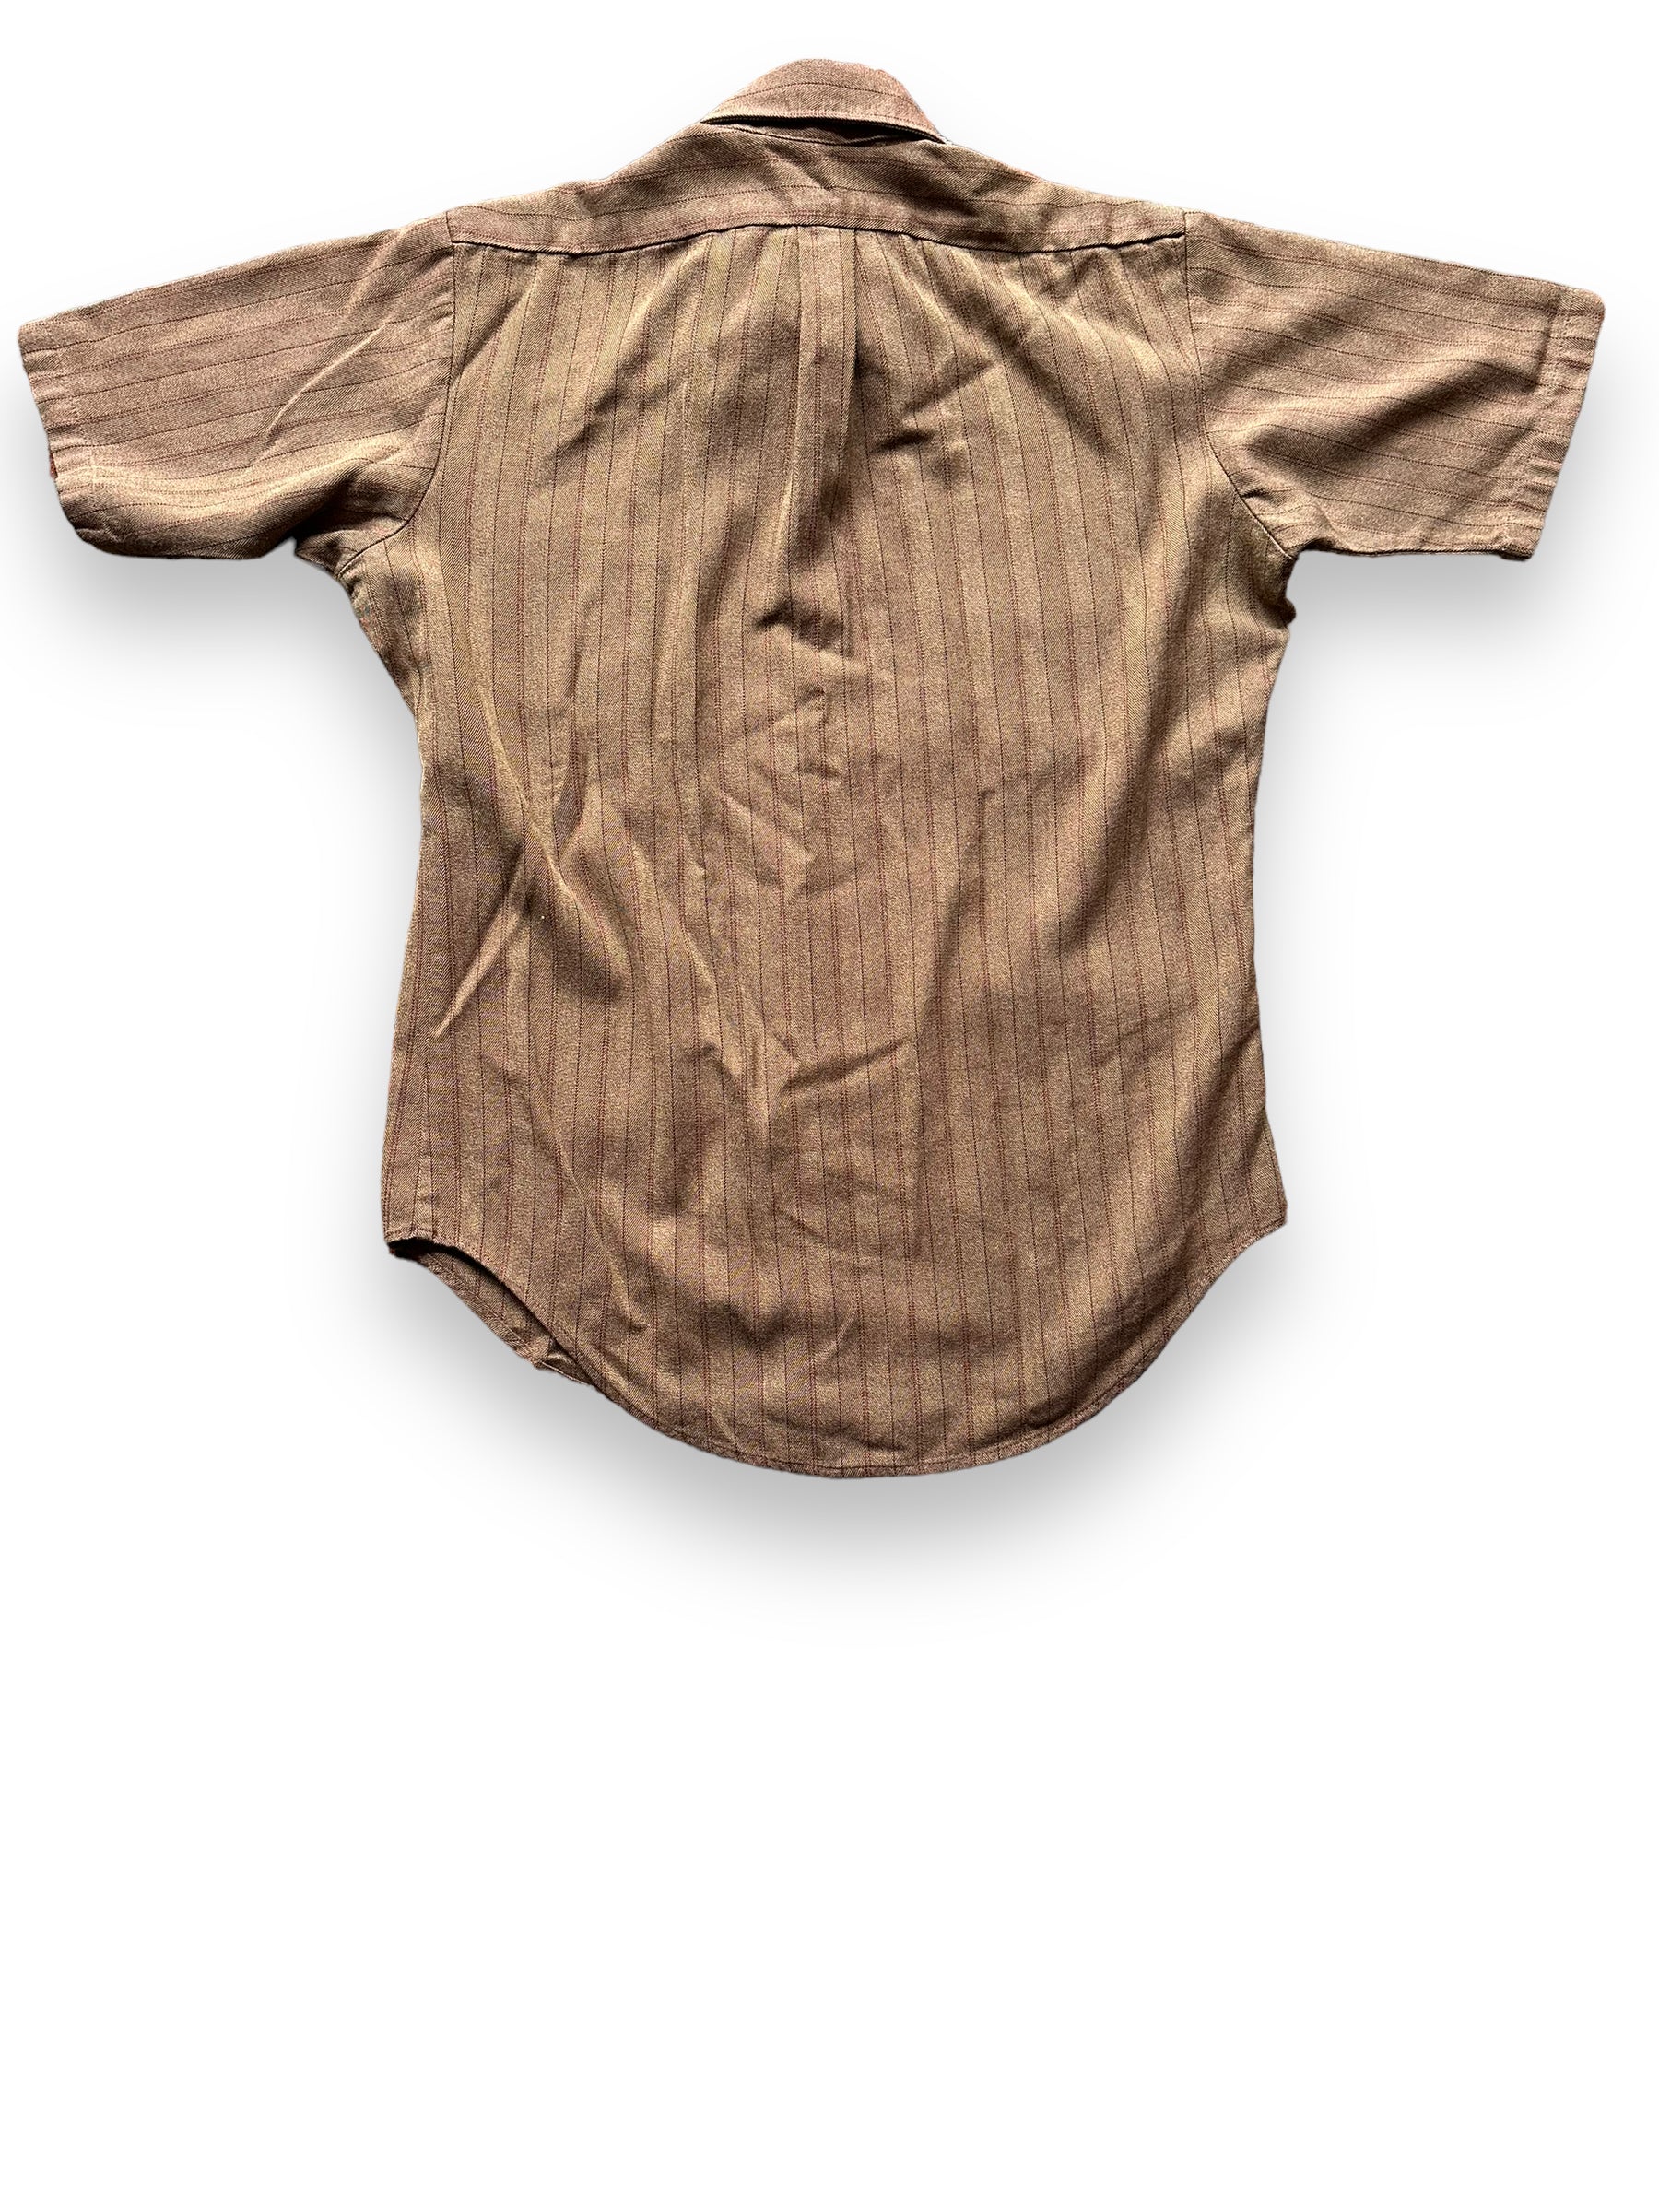 Rear View of Vintage Davinci Brown Stripes Short Sleeve Button Up Shirt SZ M | Vintage Button Up Shirt Seattle | Barn Owl Vintage Seattle